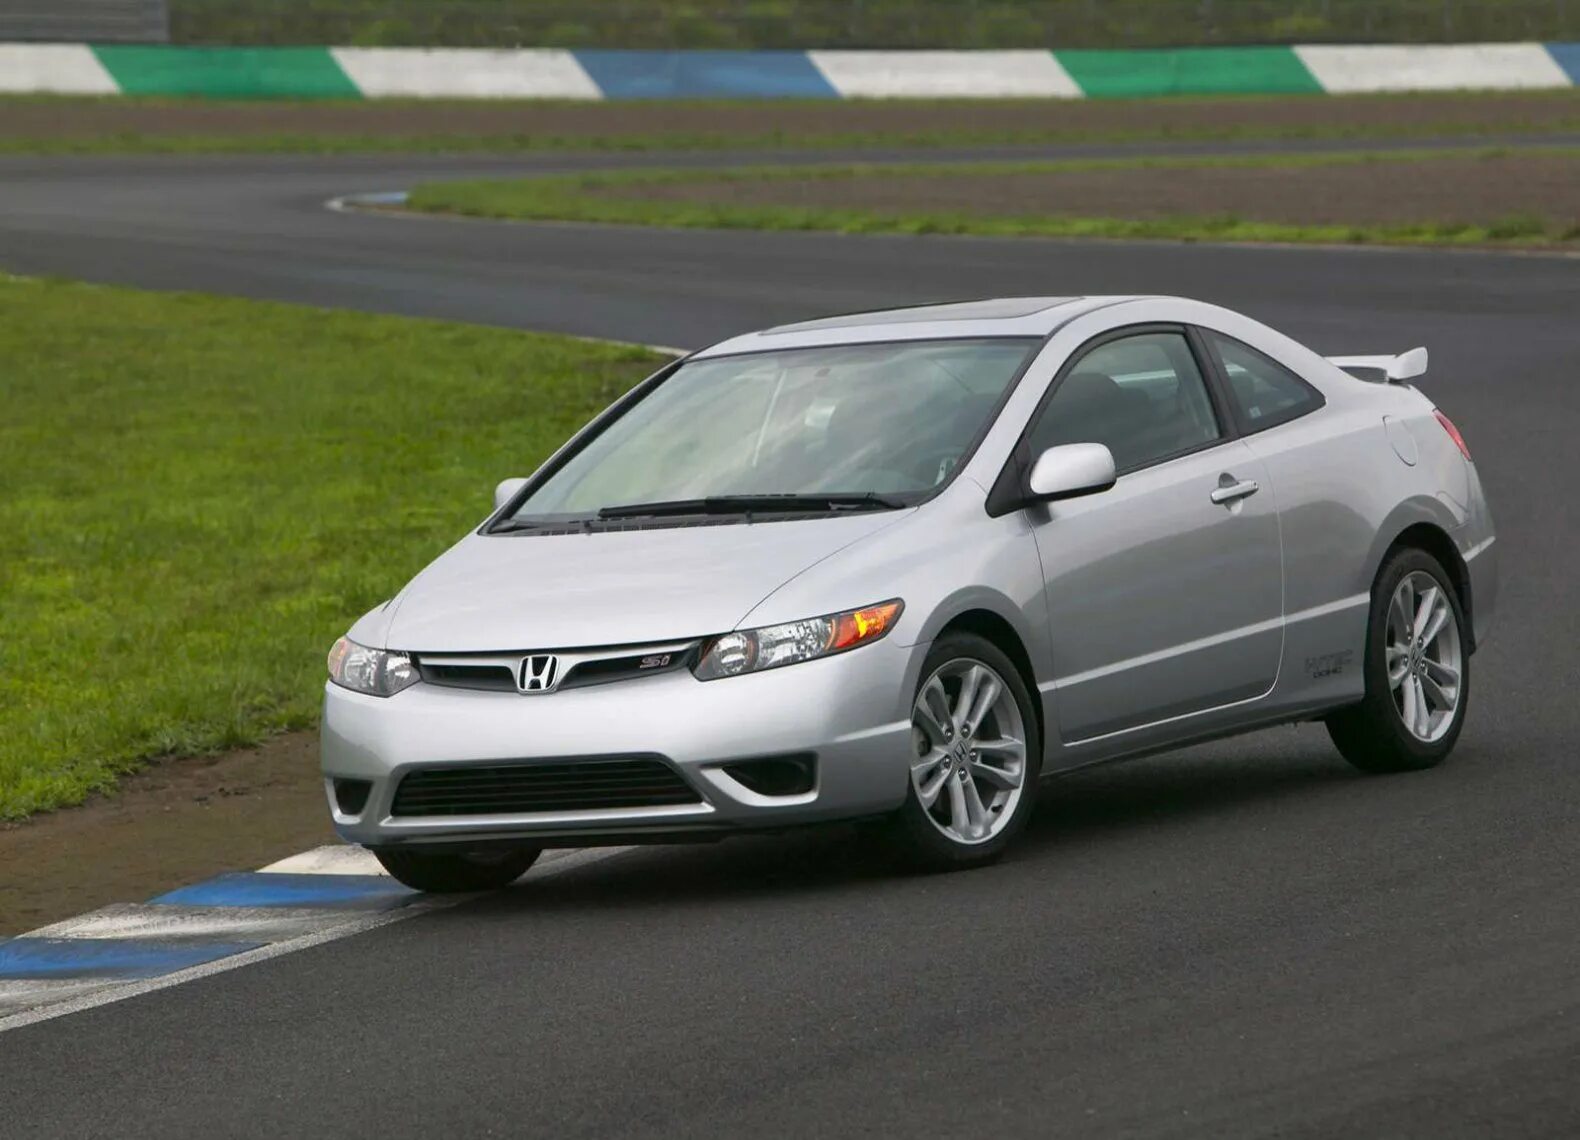 Цивик 2006 года. Honda Civic 2006 Sport. Honda Civic 2006 2008. Honda Civic 8 Coupe. Honda Civic si 2008.